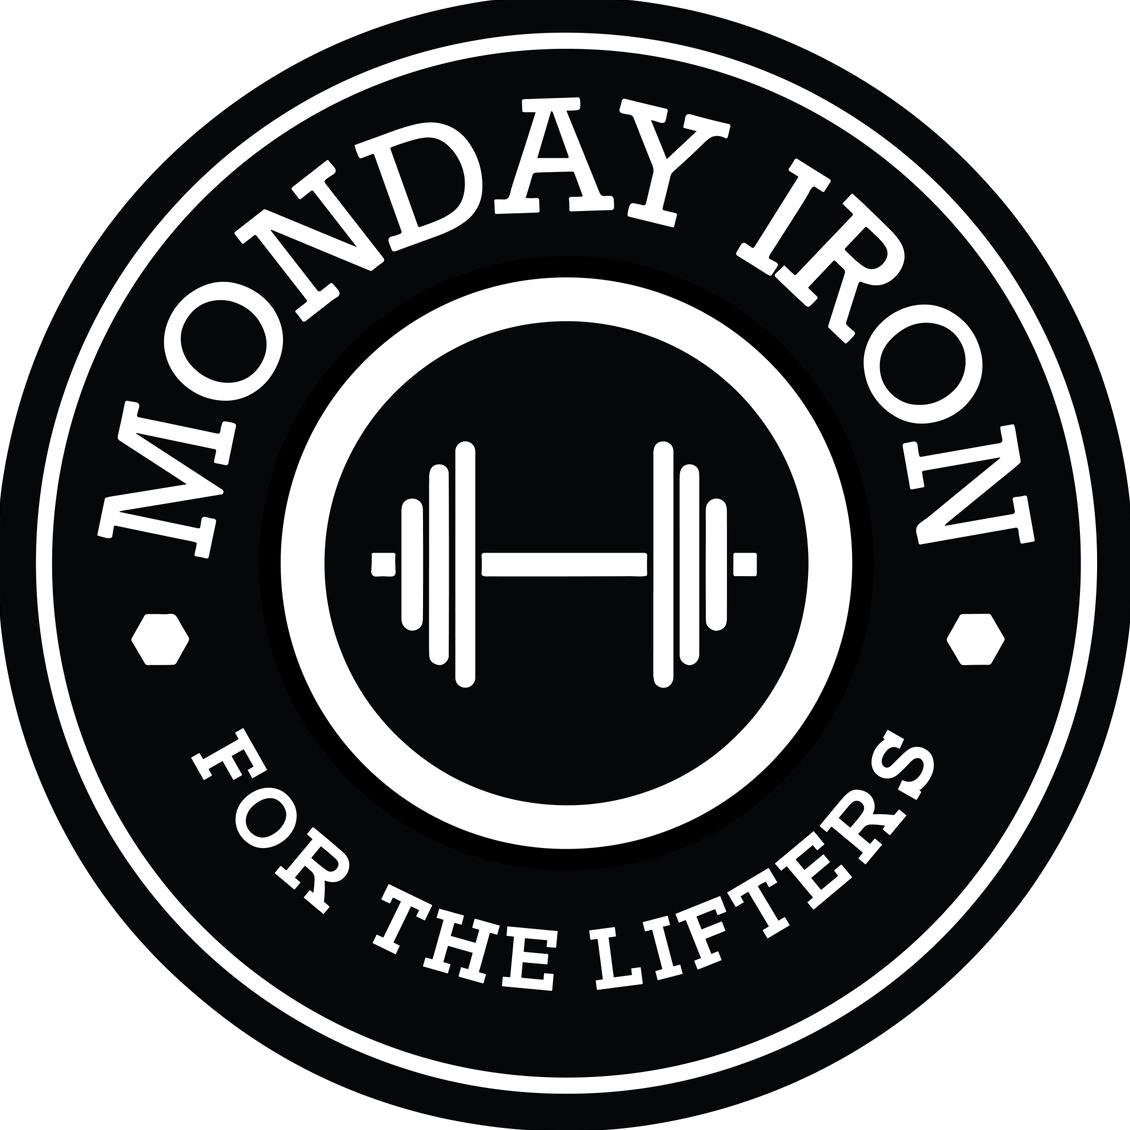 Monday Iron's images